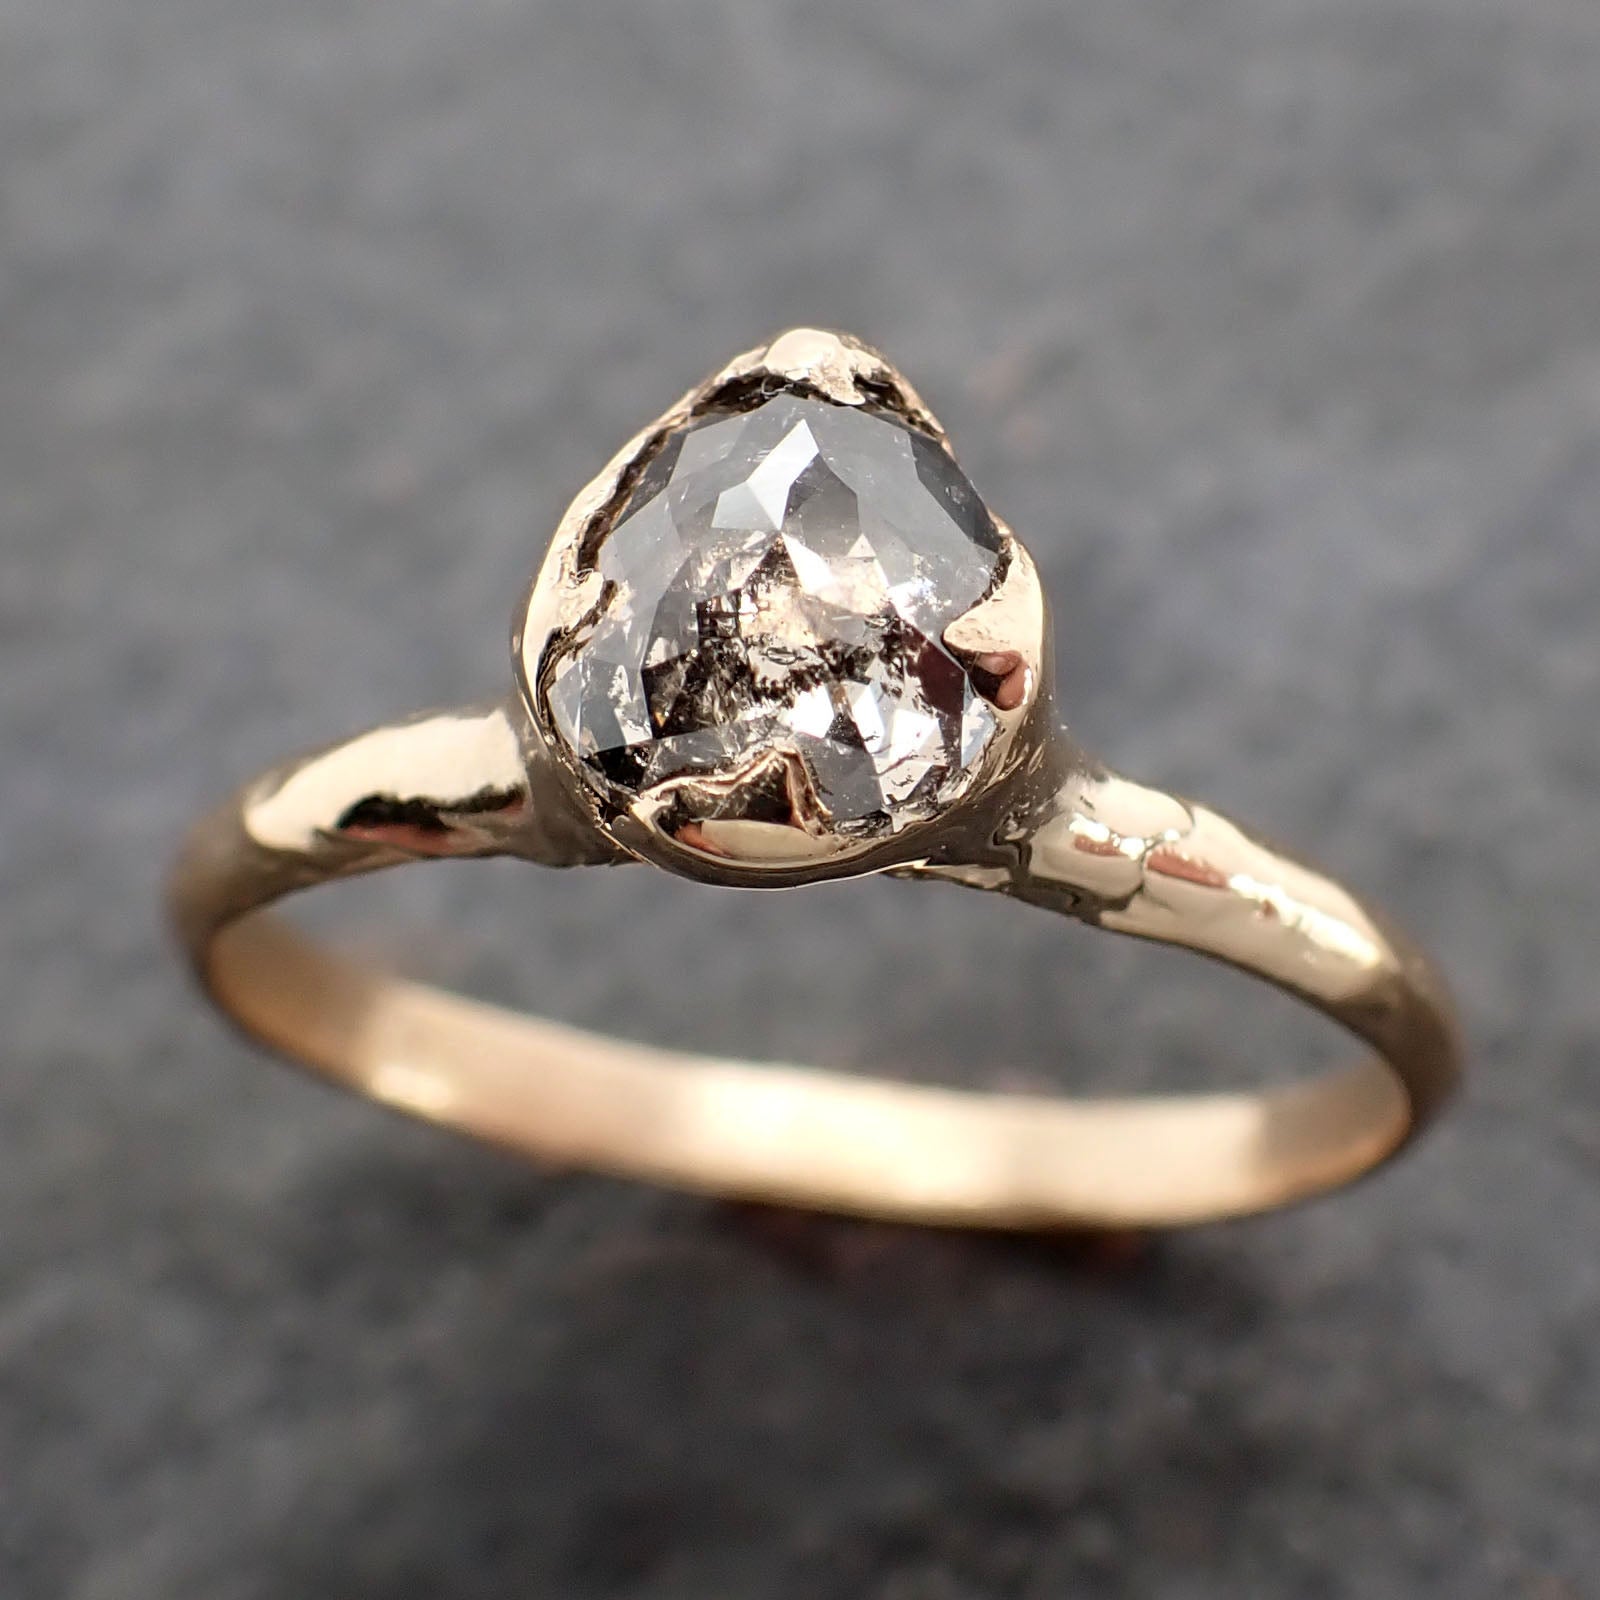 fancy cut salt and pepper diamond solitaire engagement 14k yellow gold wedding ring diamond ring byangeline 2610 Alternative Engagement